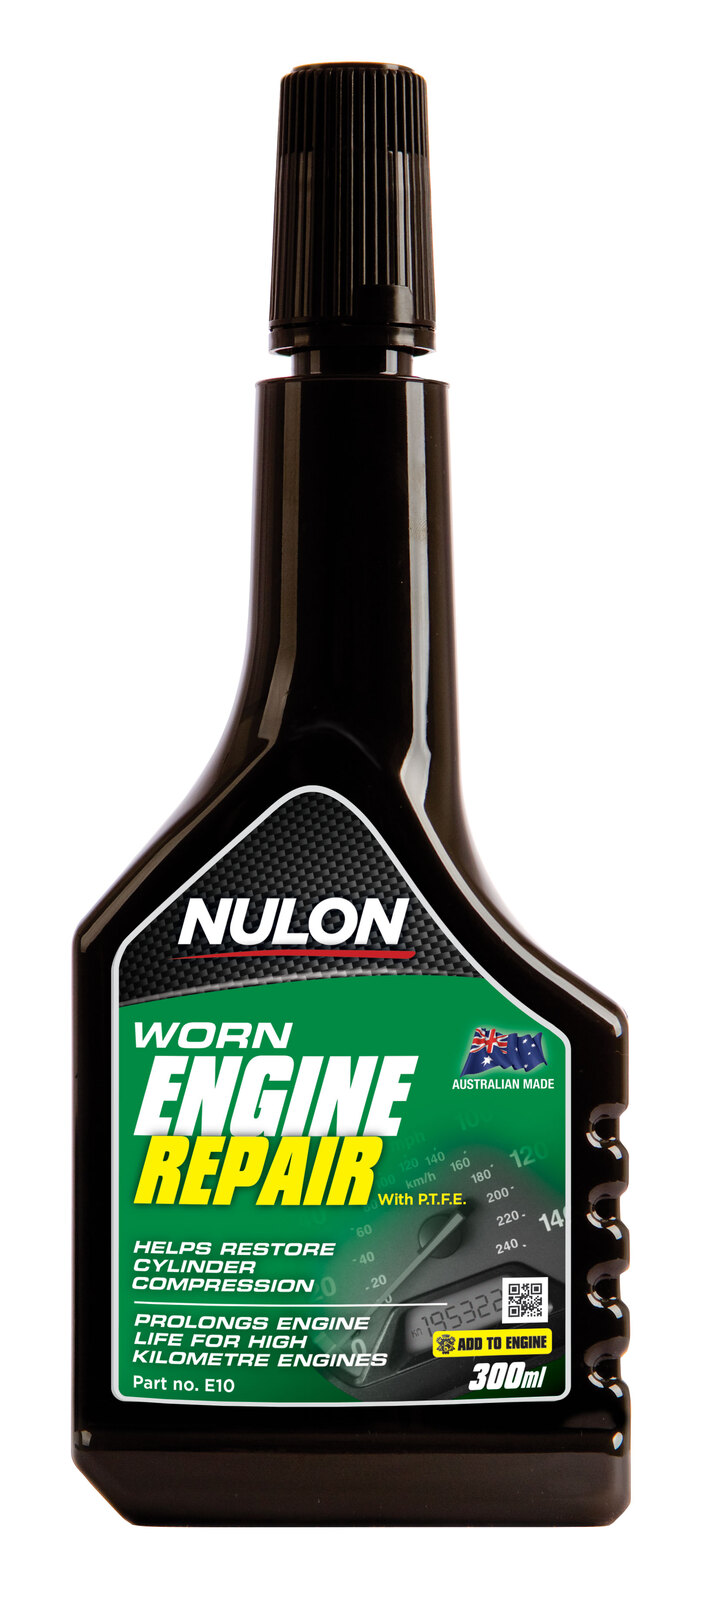 NULON 300ml Worn Engine Treatment, Each